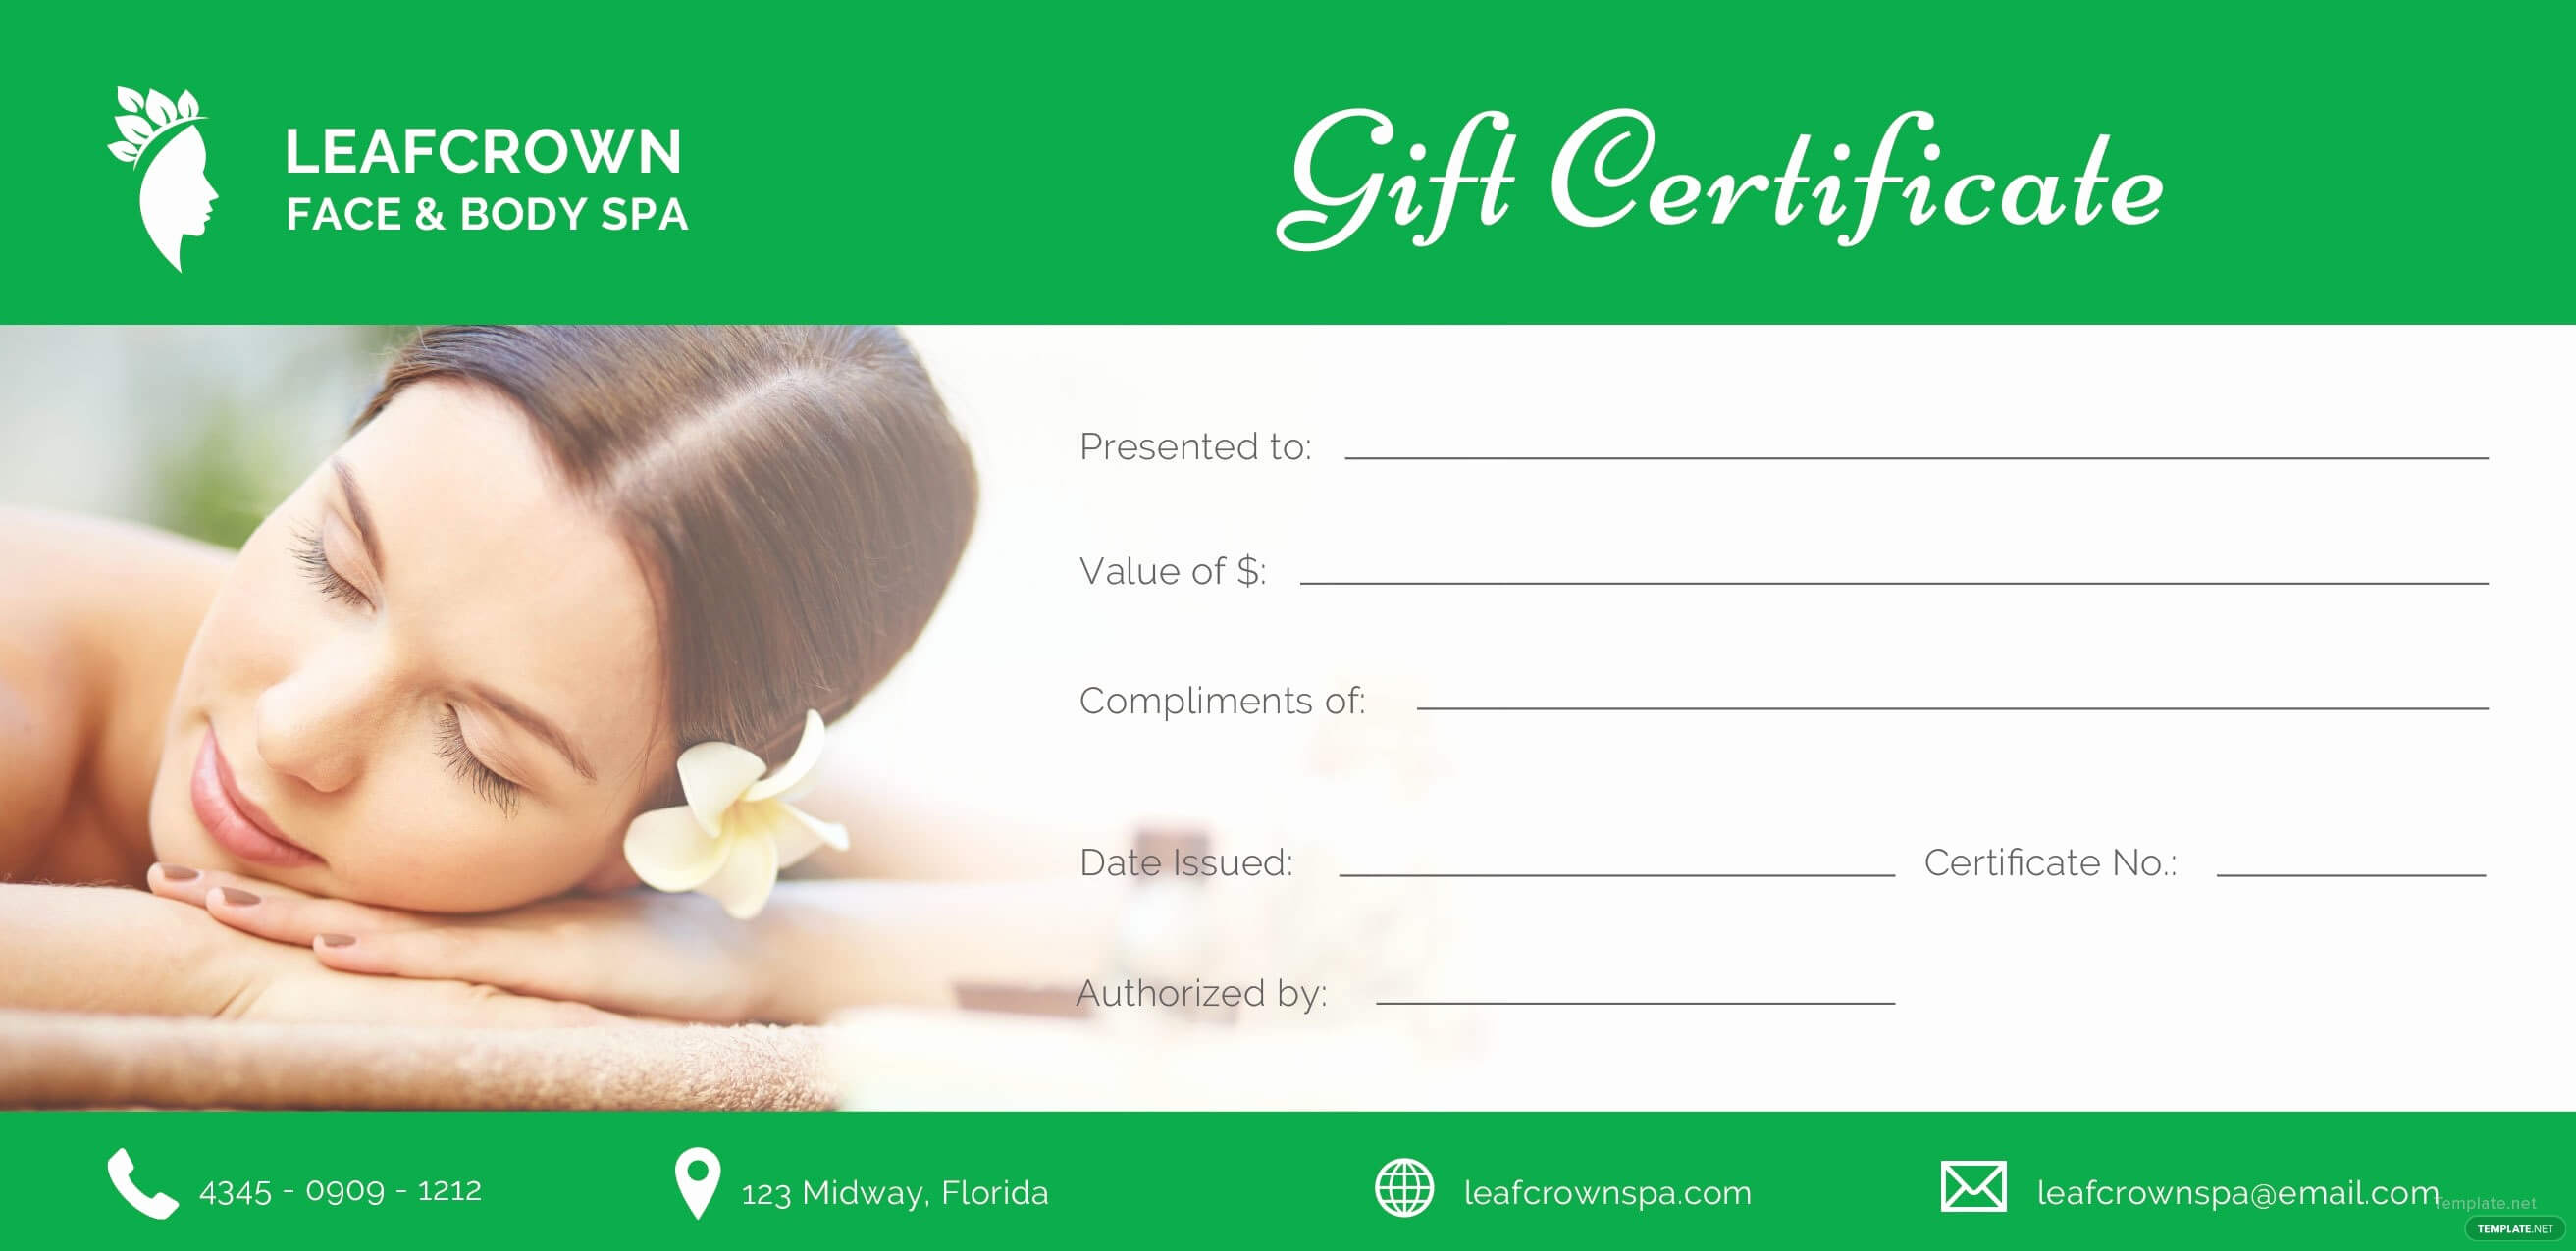 50 Salon Gift Certificate Templates | Culturatti Throughout Spa Day Gift Certificate Template